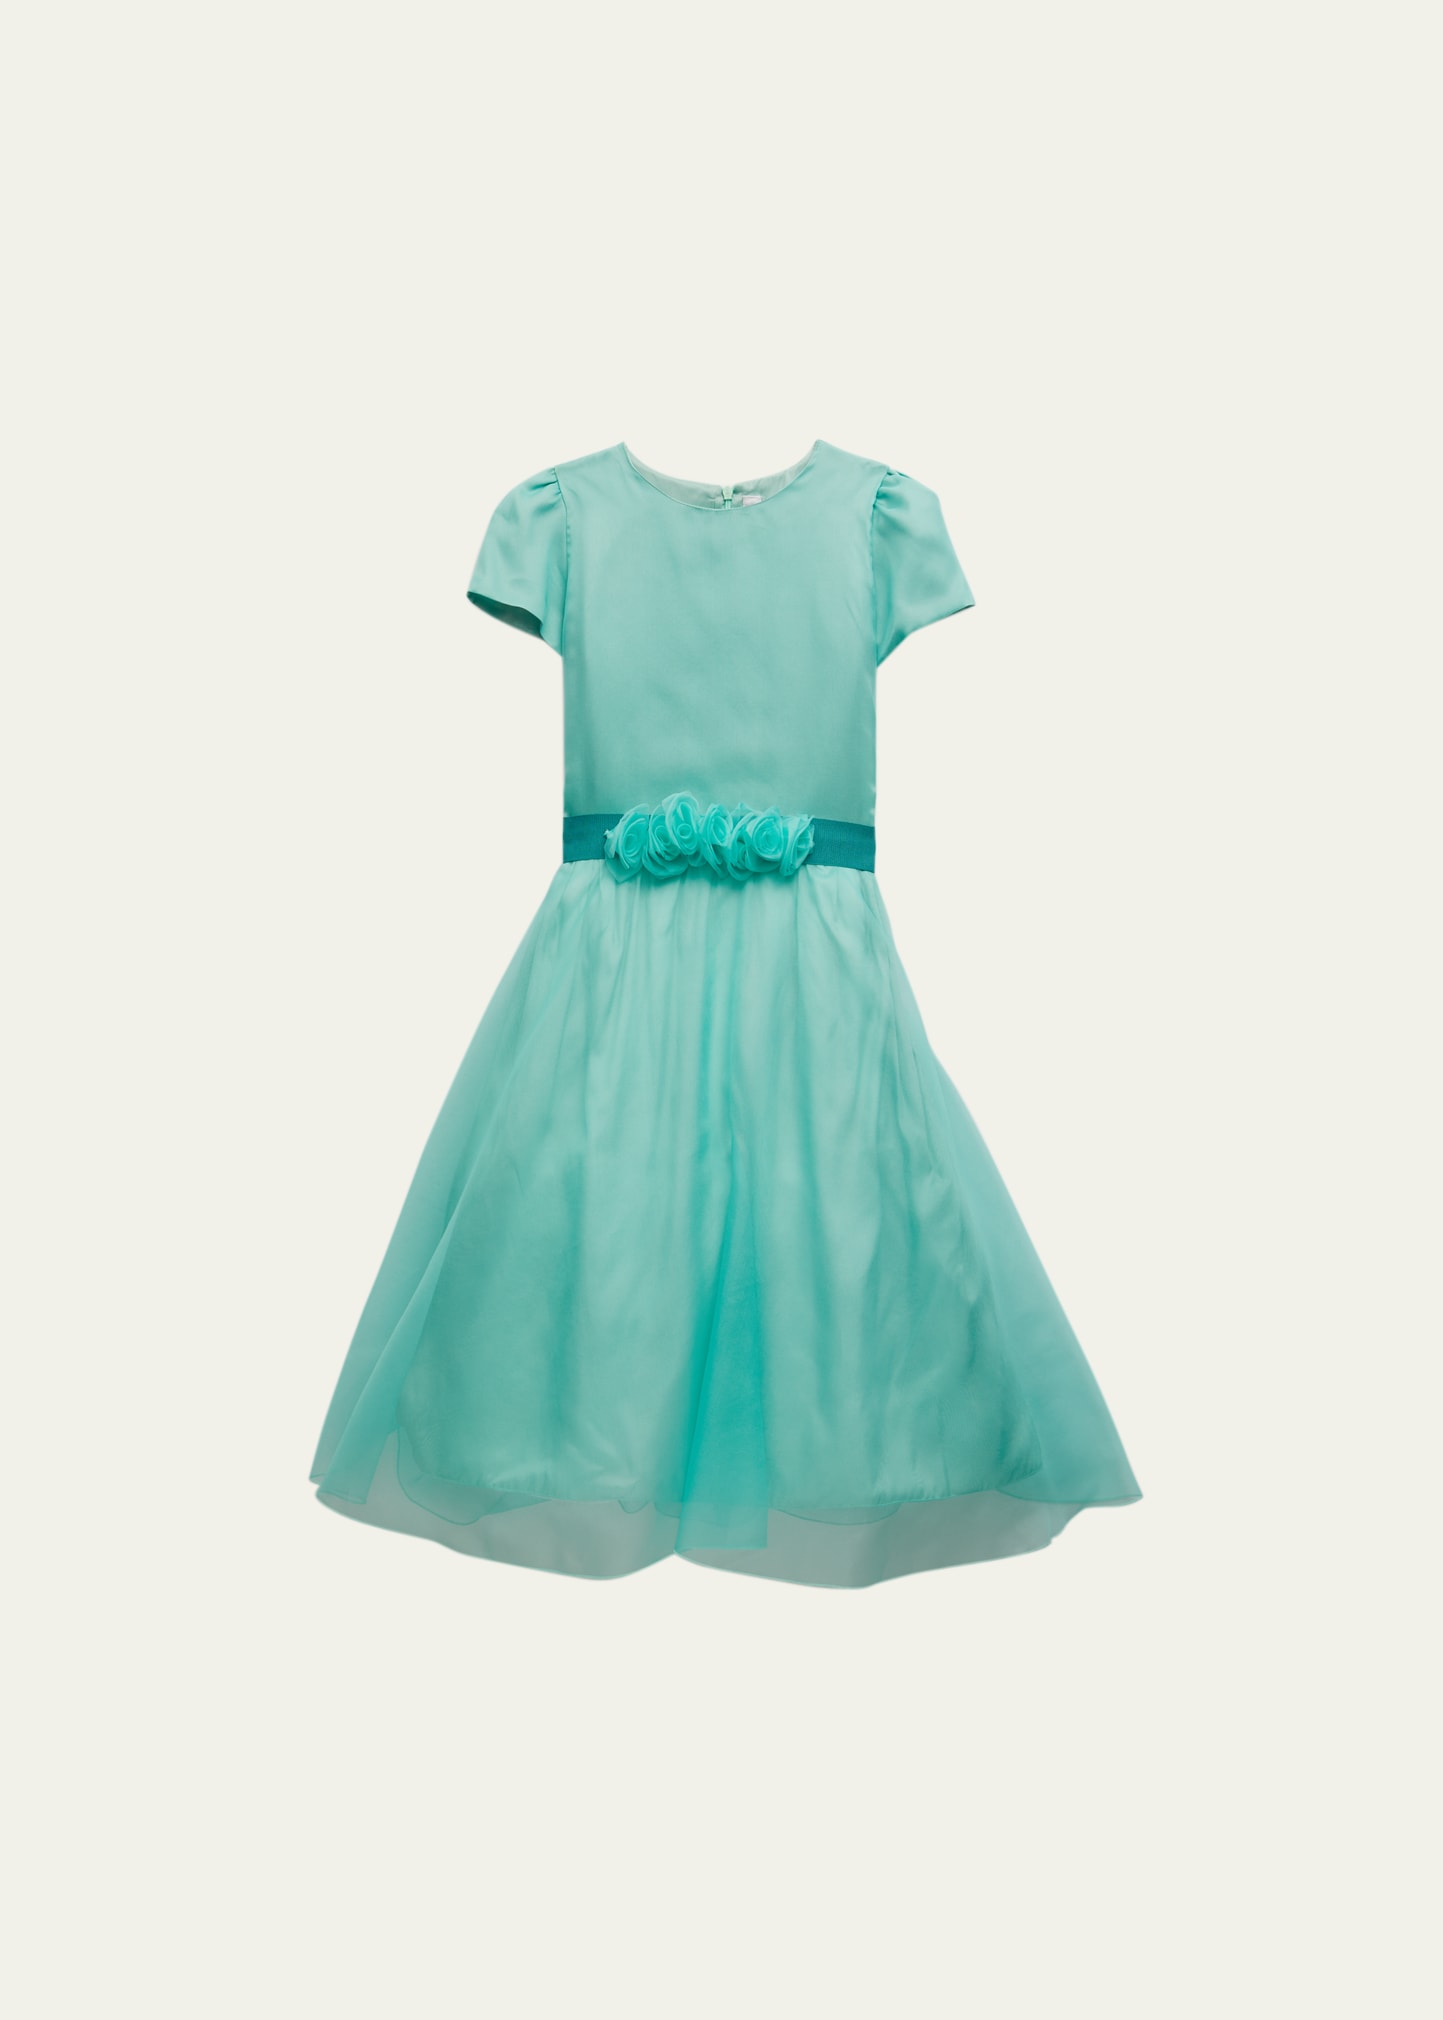 Mariella Ferrari Kids' Girl's Flower Dress With Shine In Green